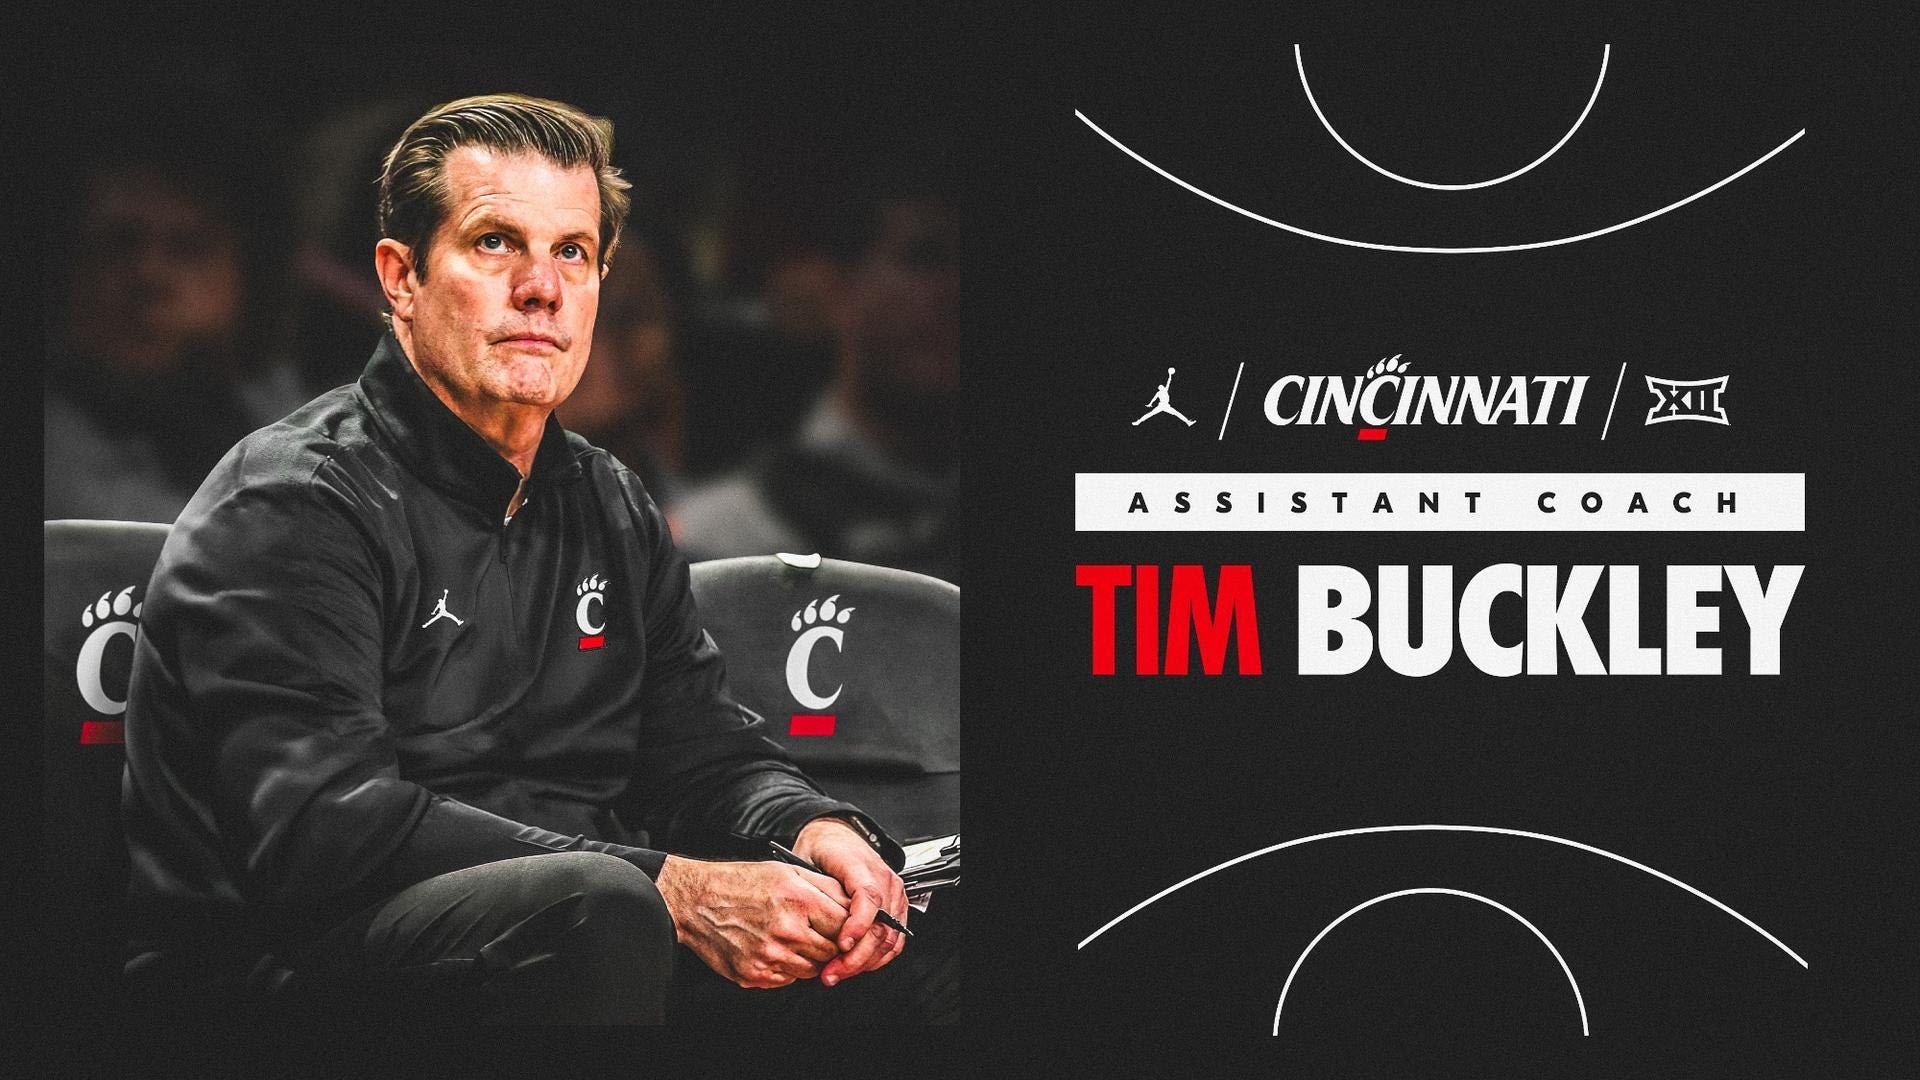 Cincinnati Bearcats basketball officially adds Tim Buckley as assistant coach